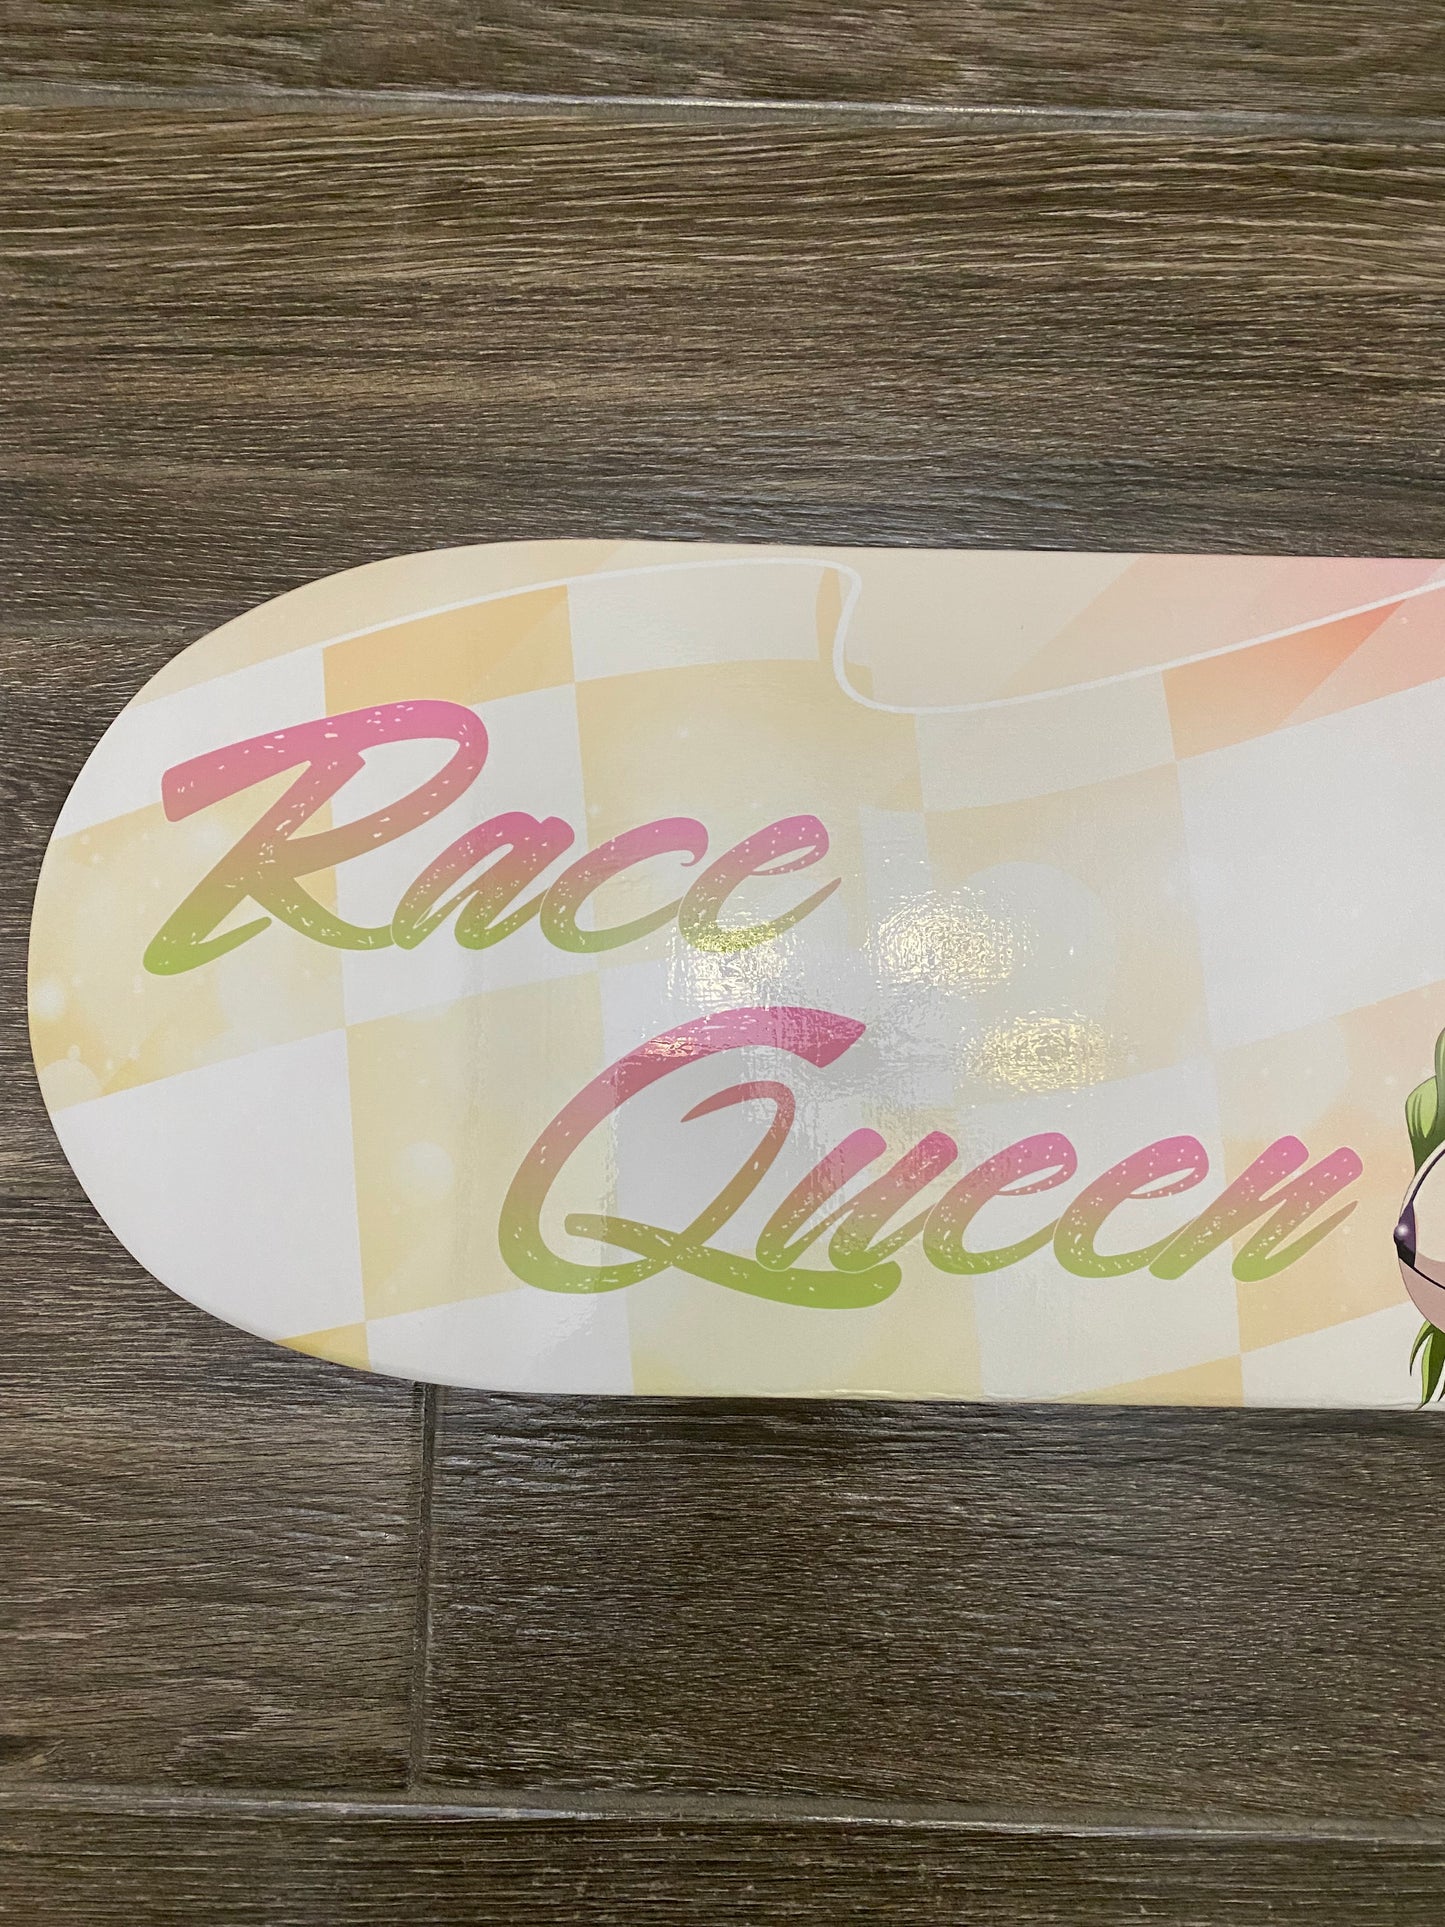 Race Queen Mitsuri Skate Deck